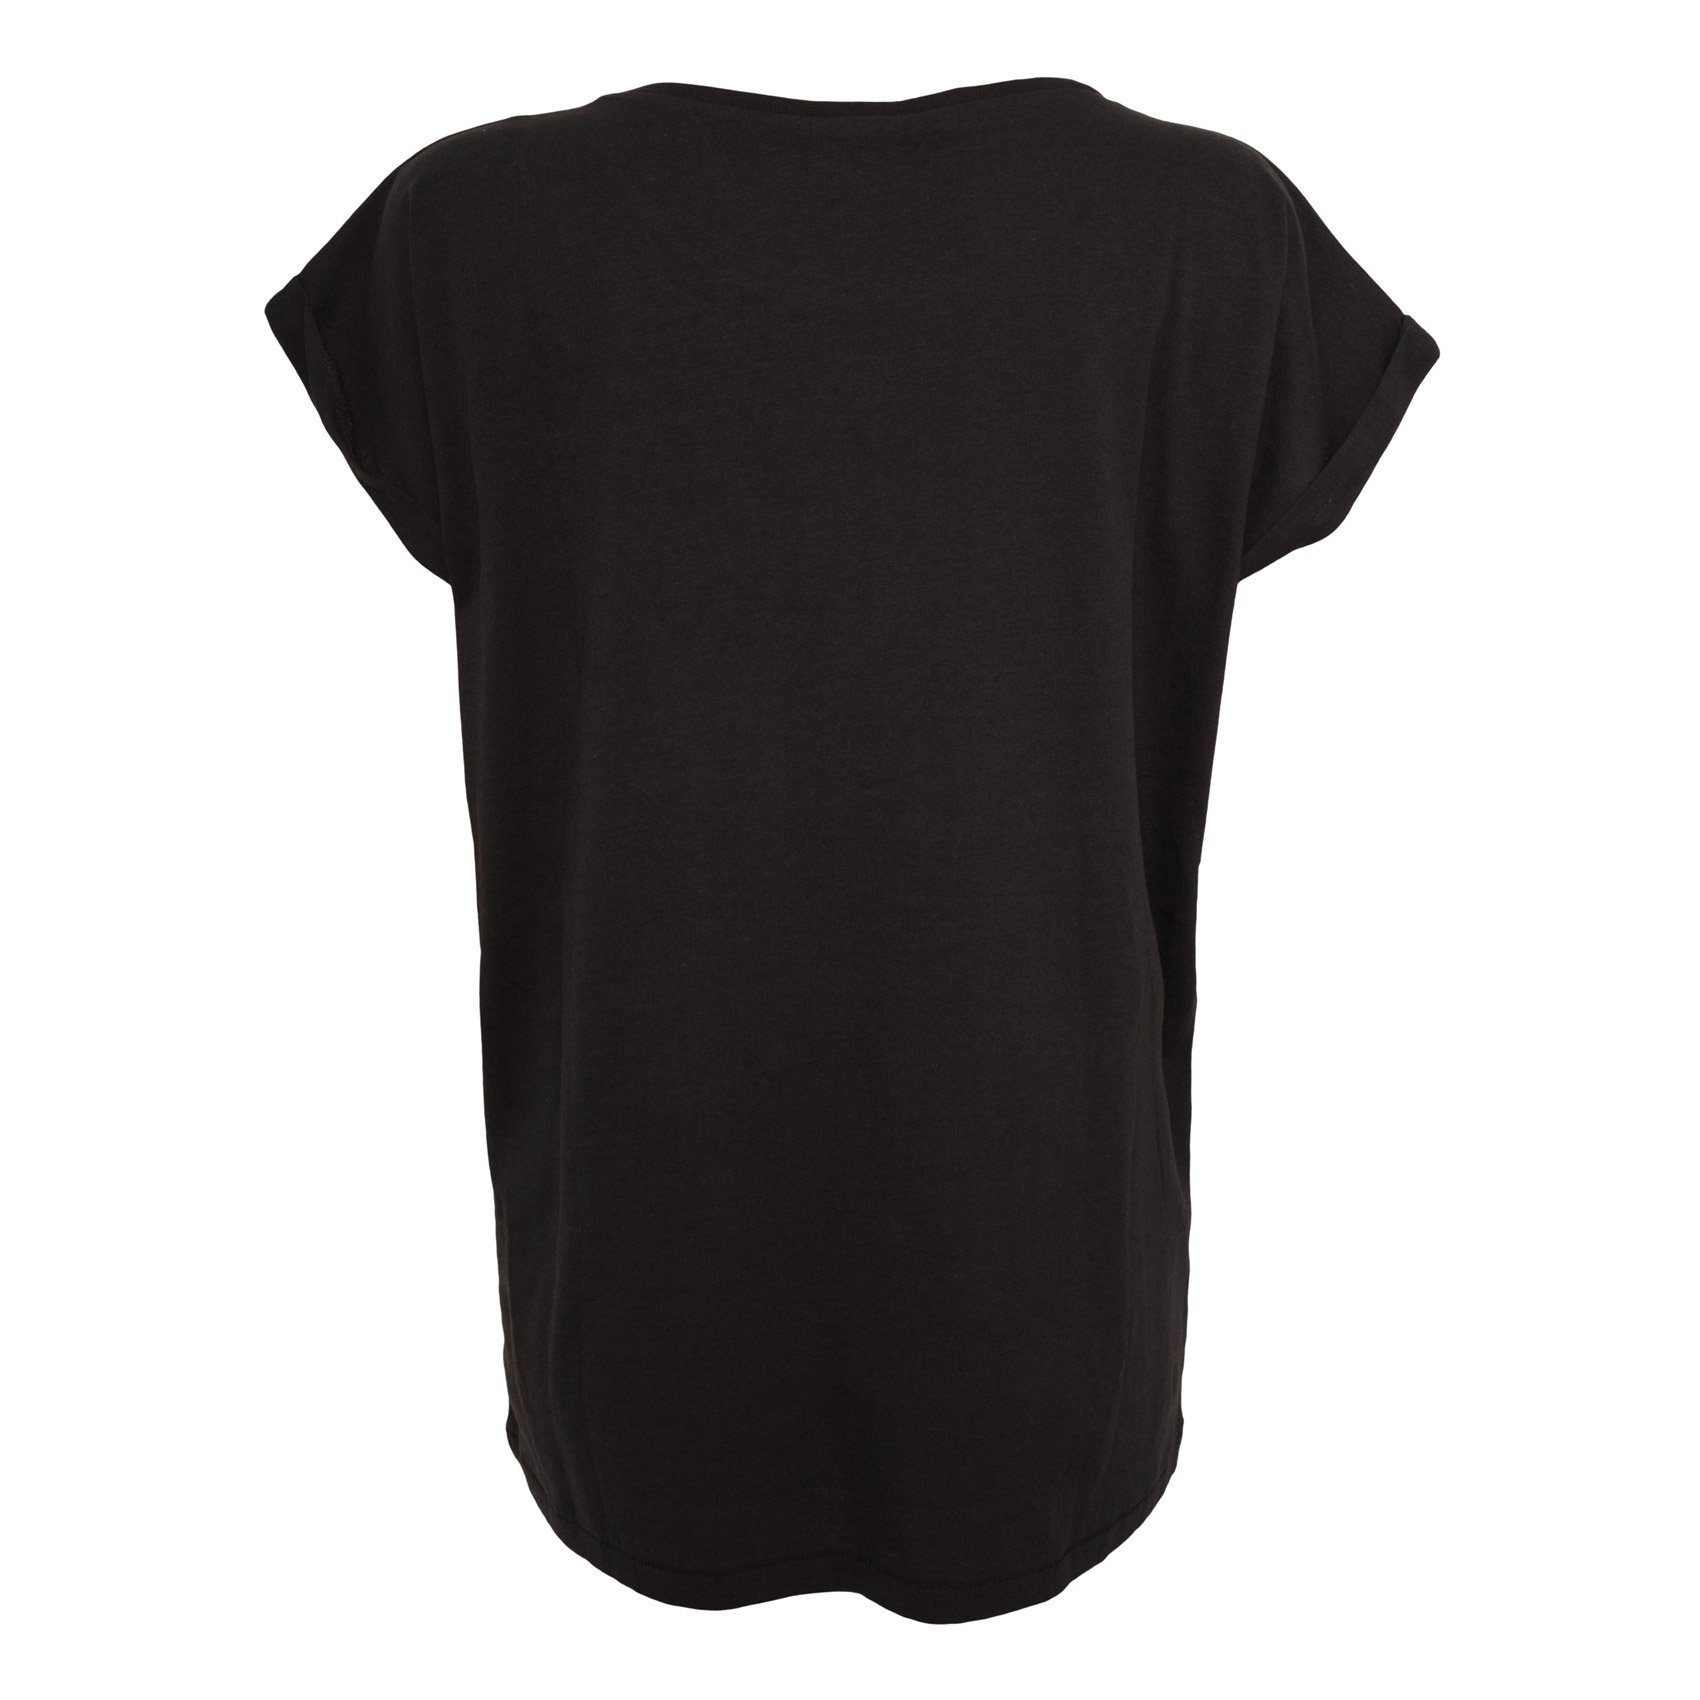 URBAN CLASSICS T-Shirt Shoulder Extended Shoulder TB771 Tee Ladies black - Extended black